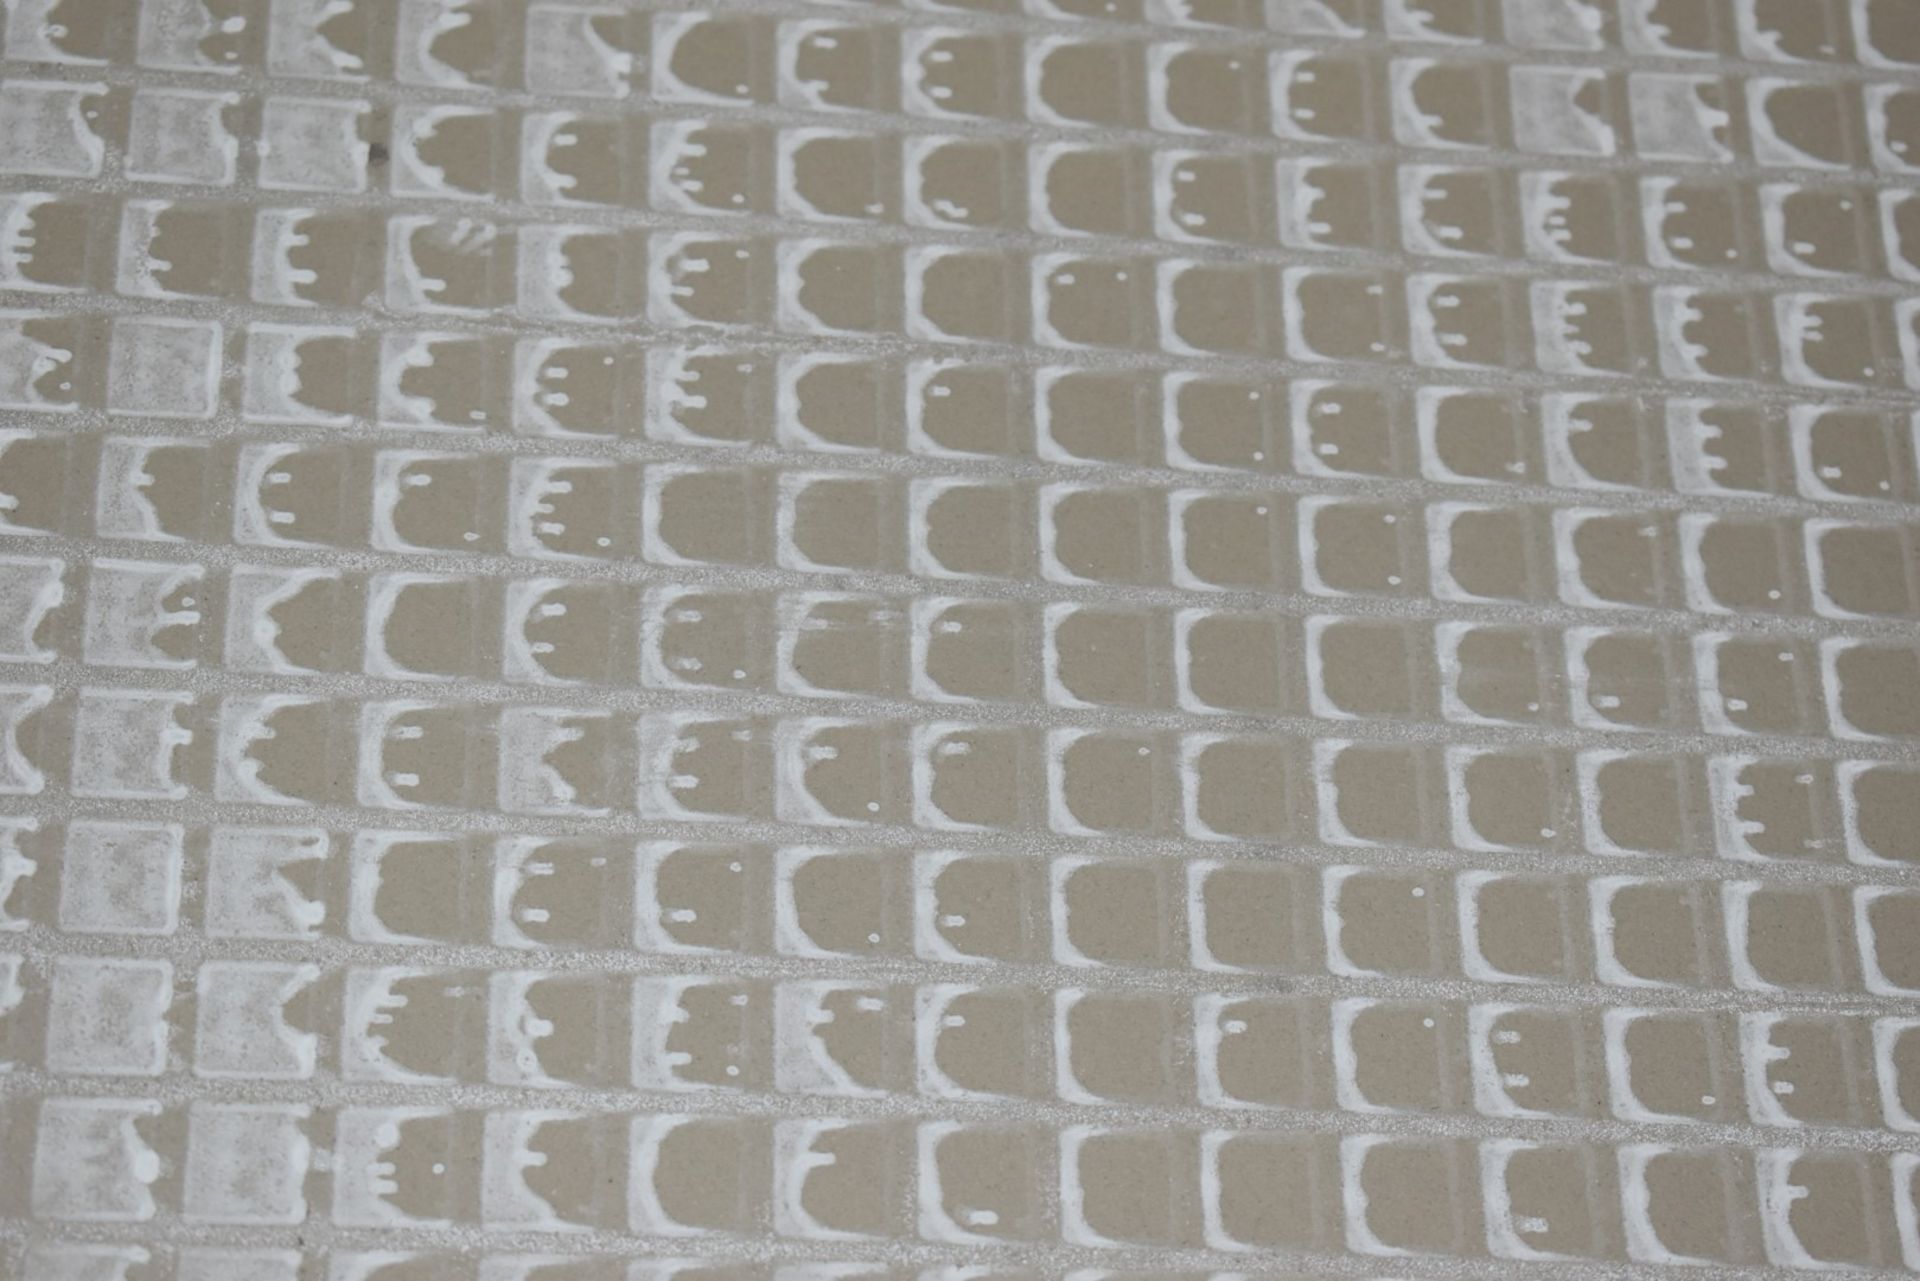 12 x Boxes of RAK Porcelain Floor or Wall Tiles - Concrete Sand Design in Beige - 30 x 60 - Image 3 of 8